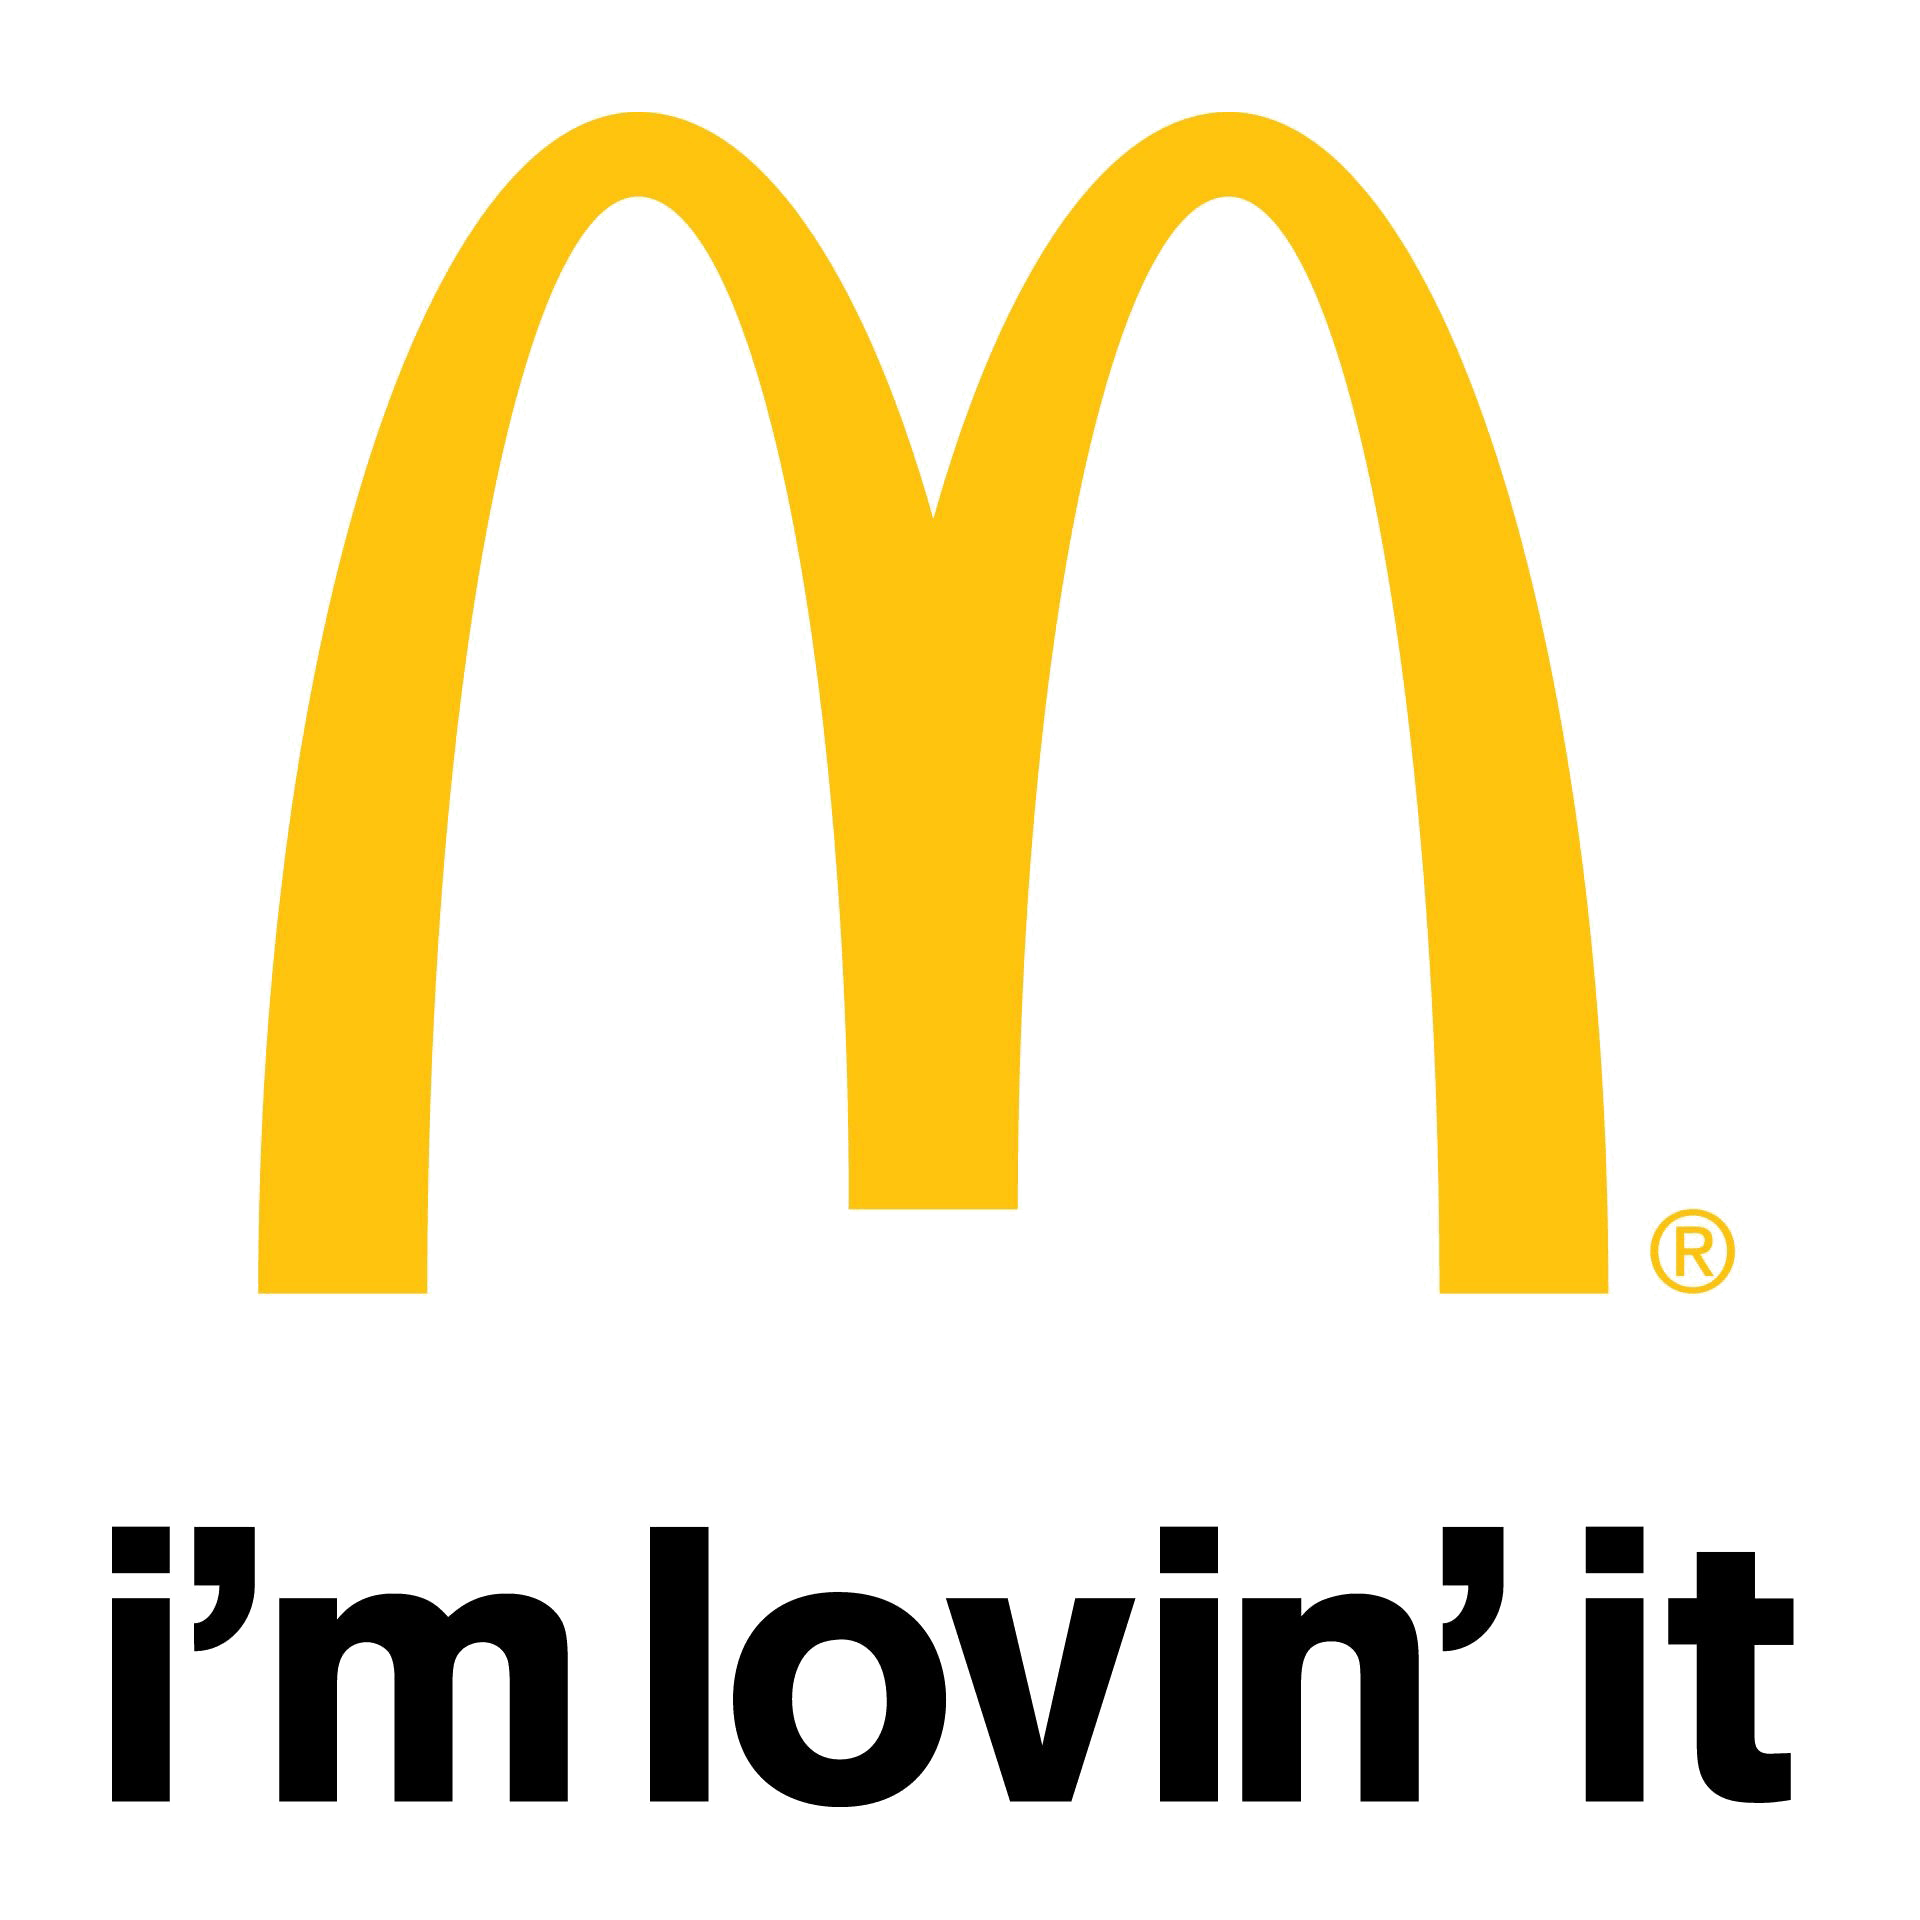 McDonlads Logo - McDonalds Logo PNG Image - PurePNG | Free transparent CC0 PNG Image ...